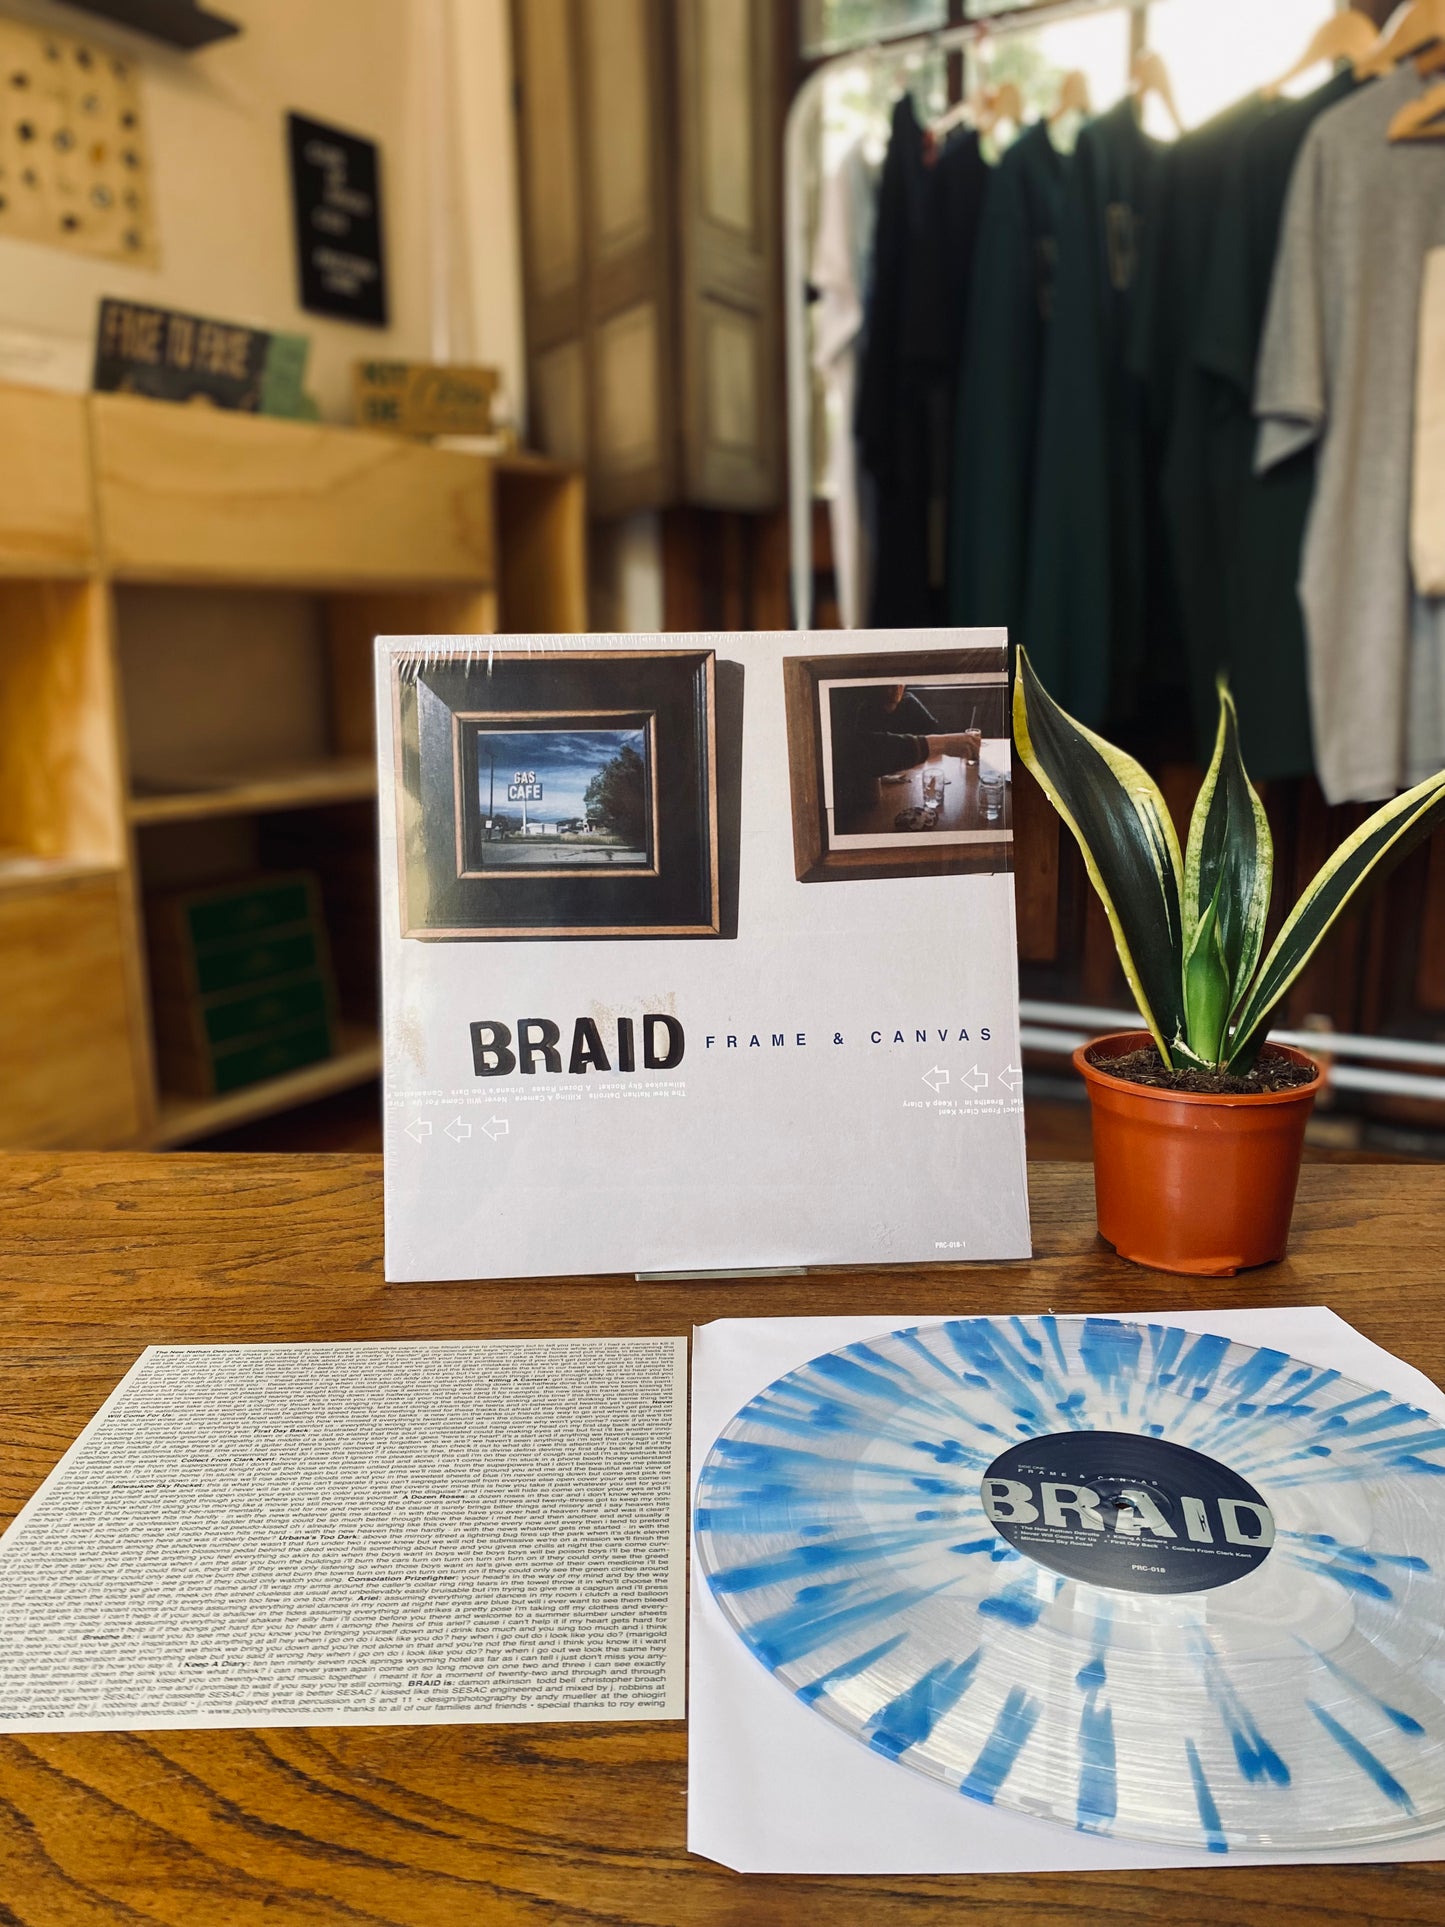 Braid - Frame & Canvas